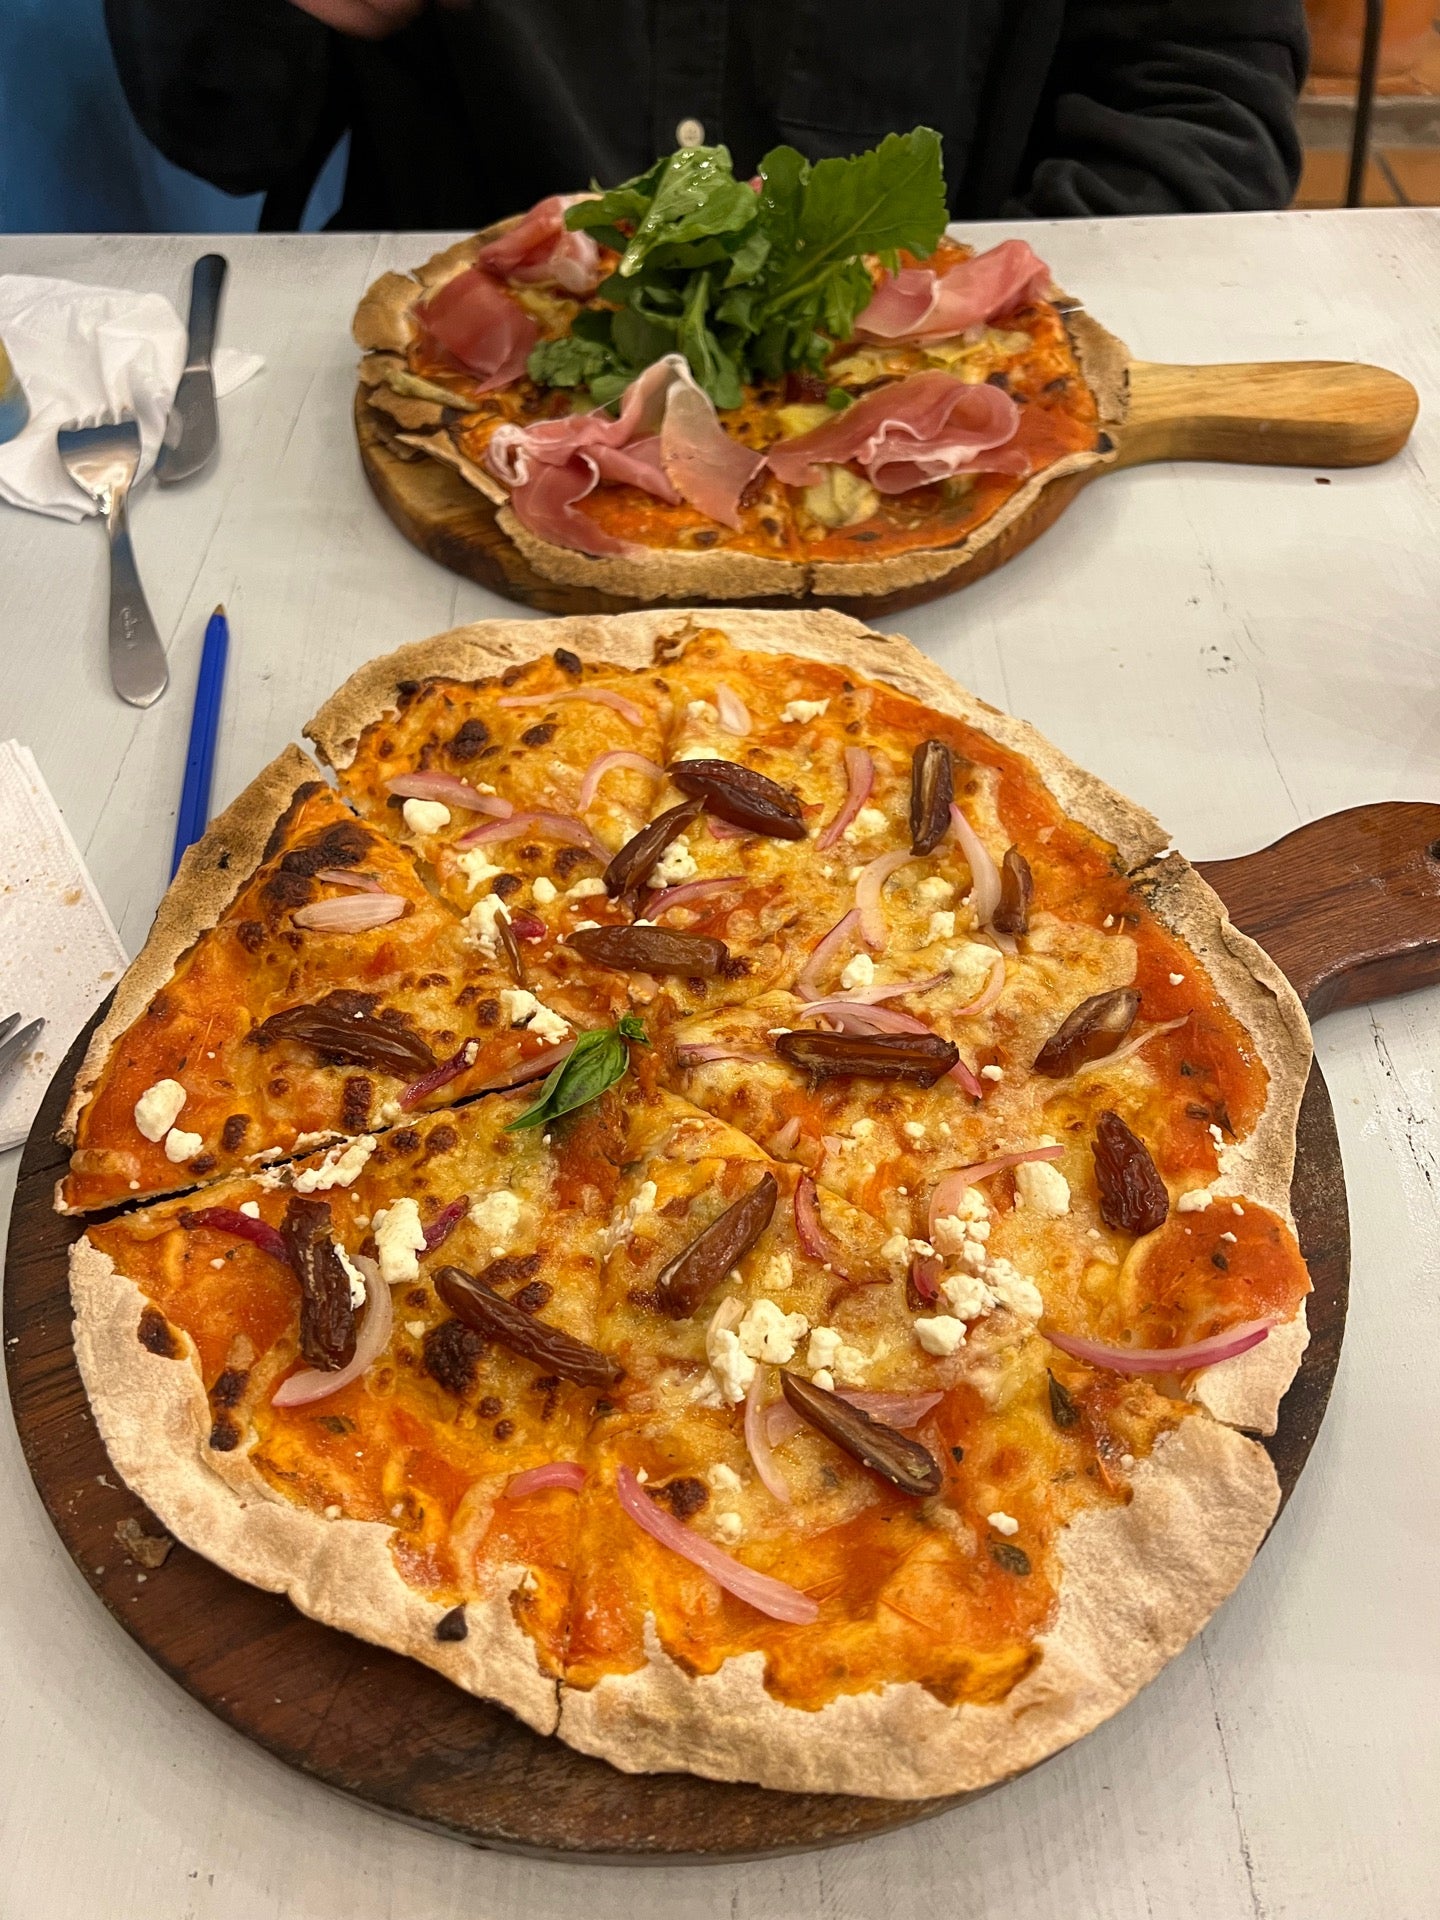 Pizza Candelaria